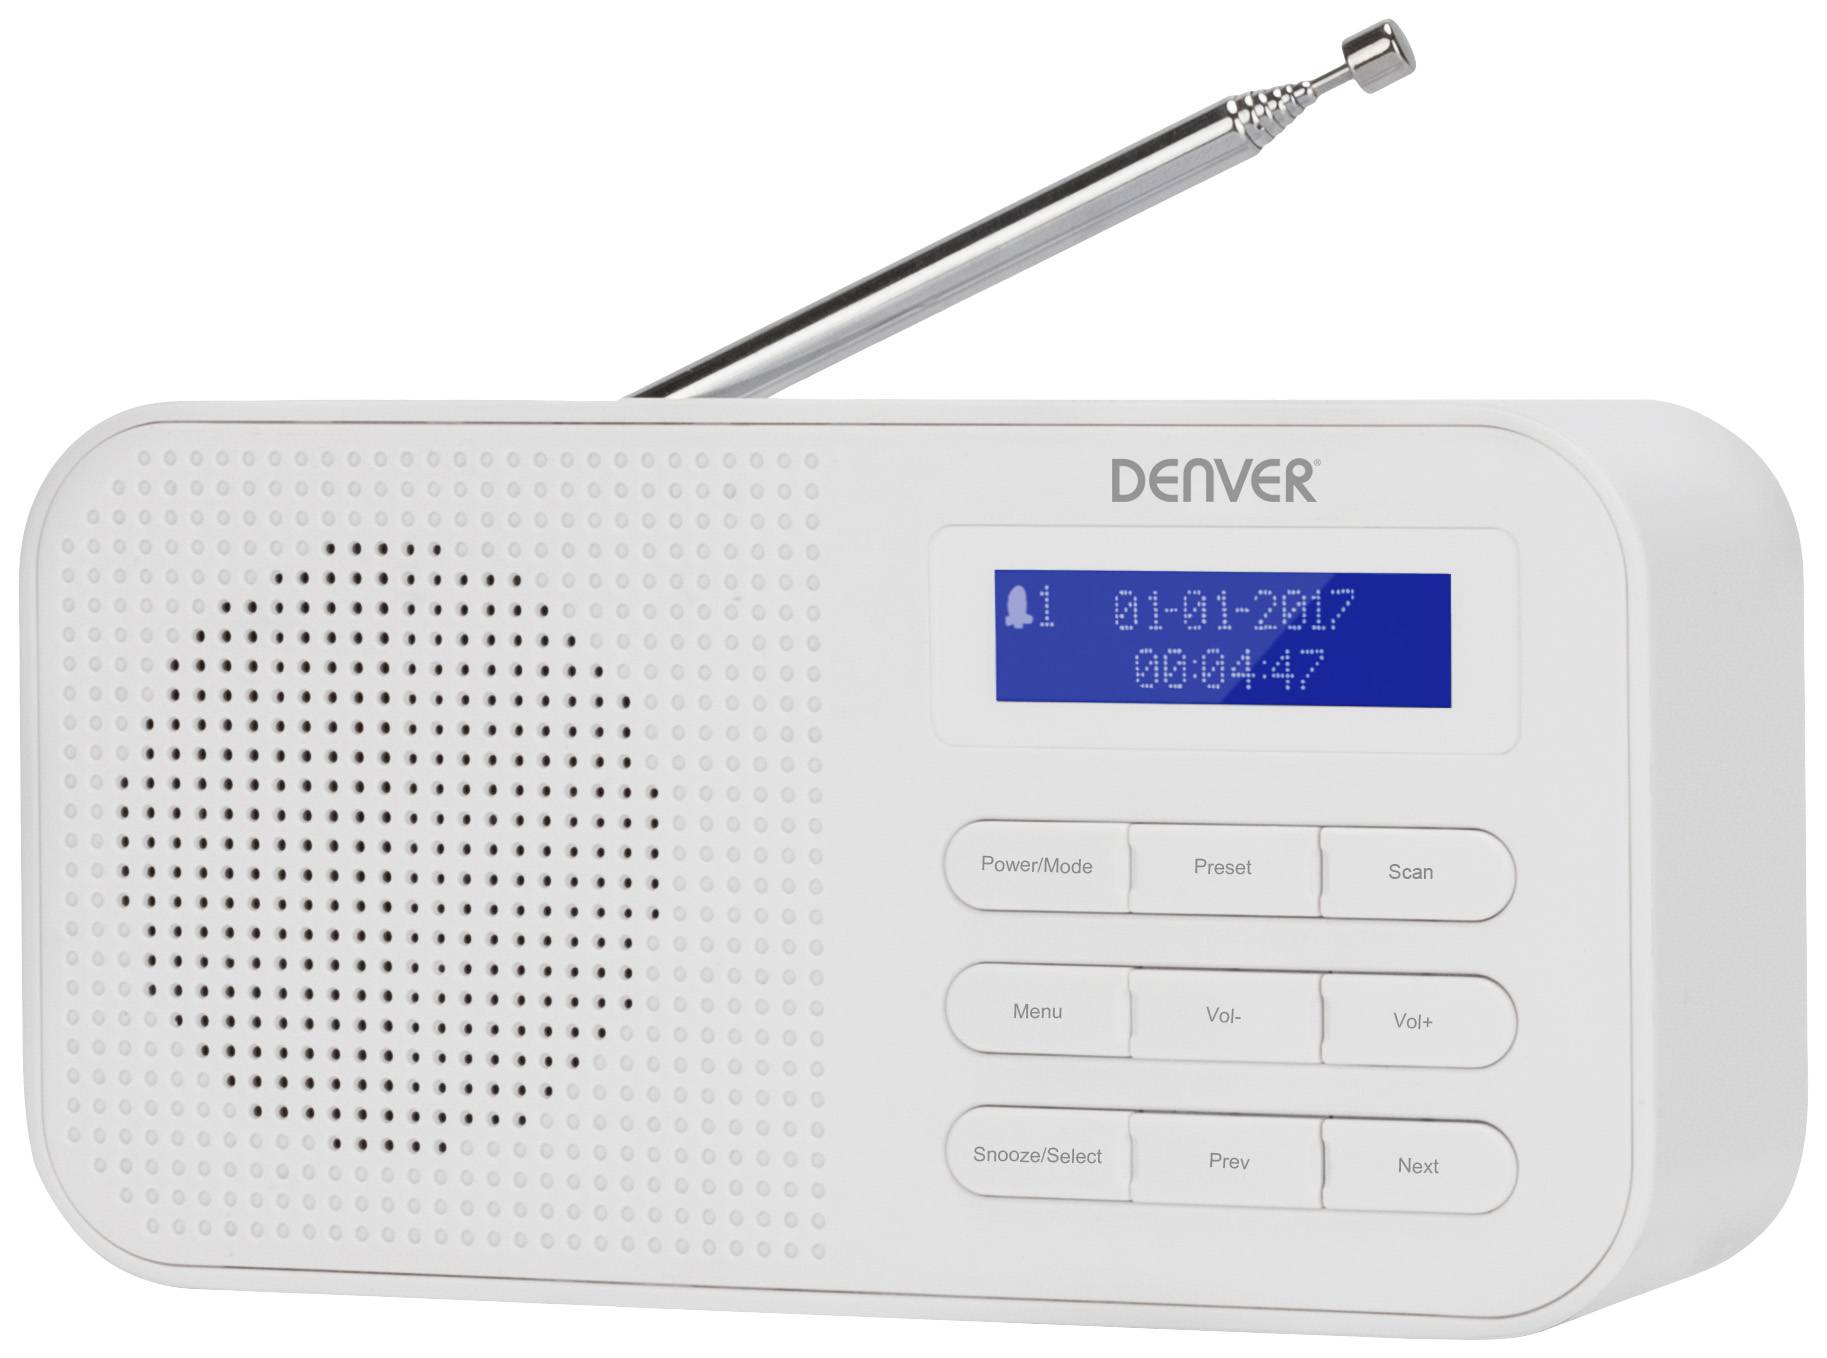 Laan porselein kalf Denver DAB-42 Pocket radio DAB+, FM Alarm clock White | Conrad.com